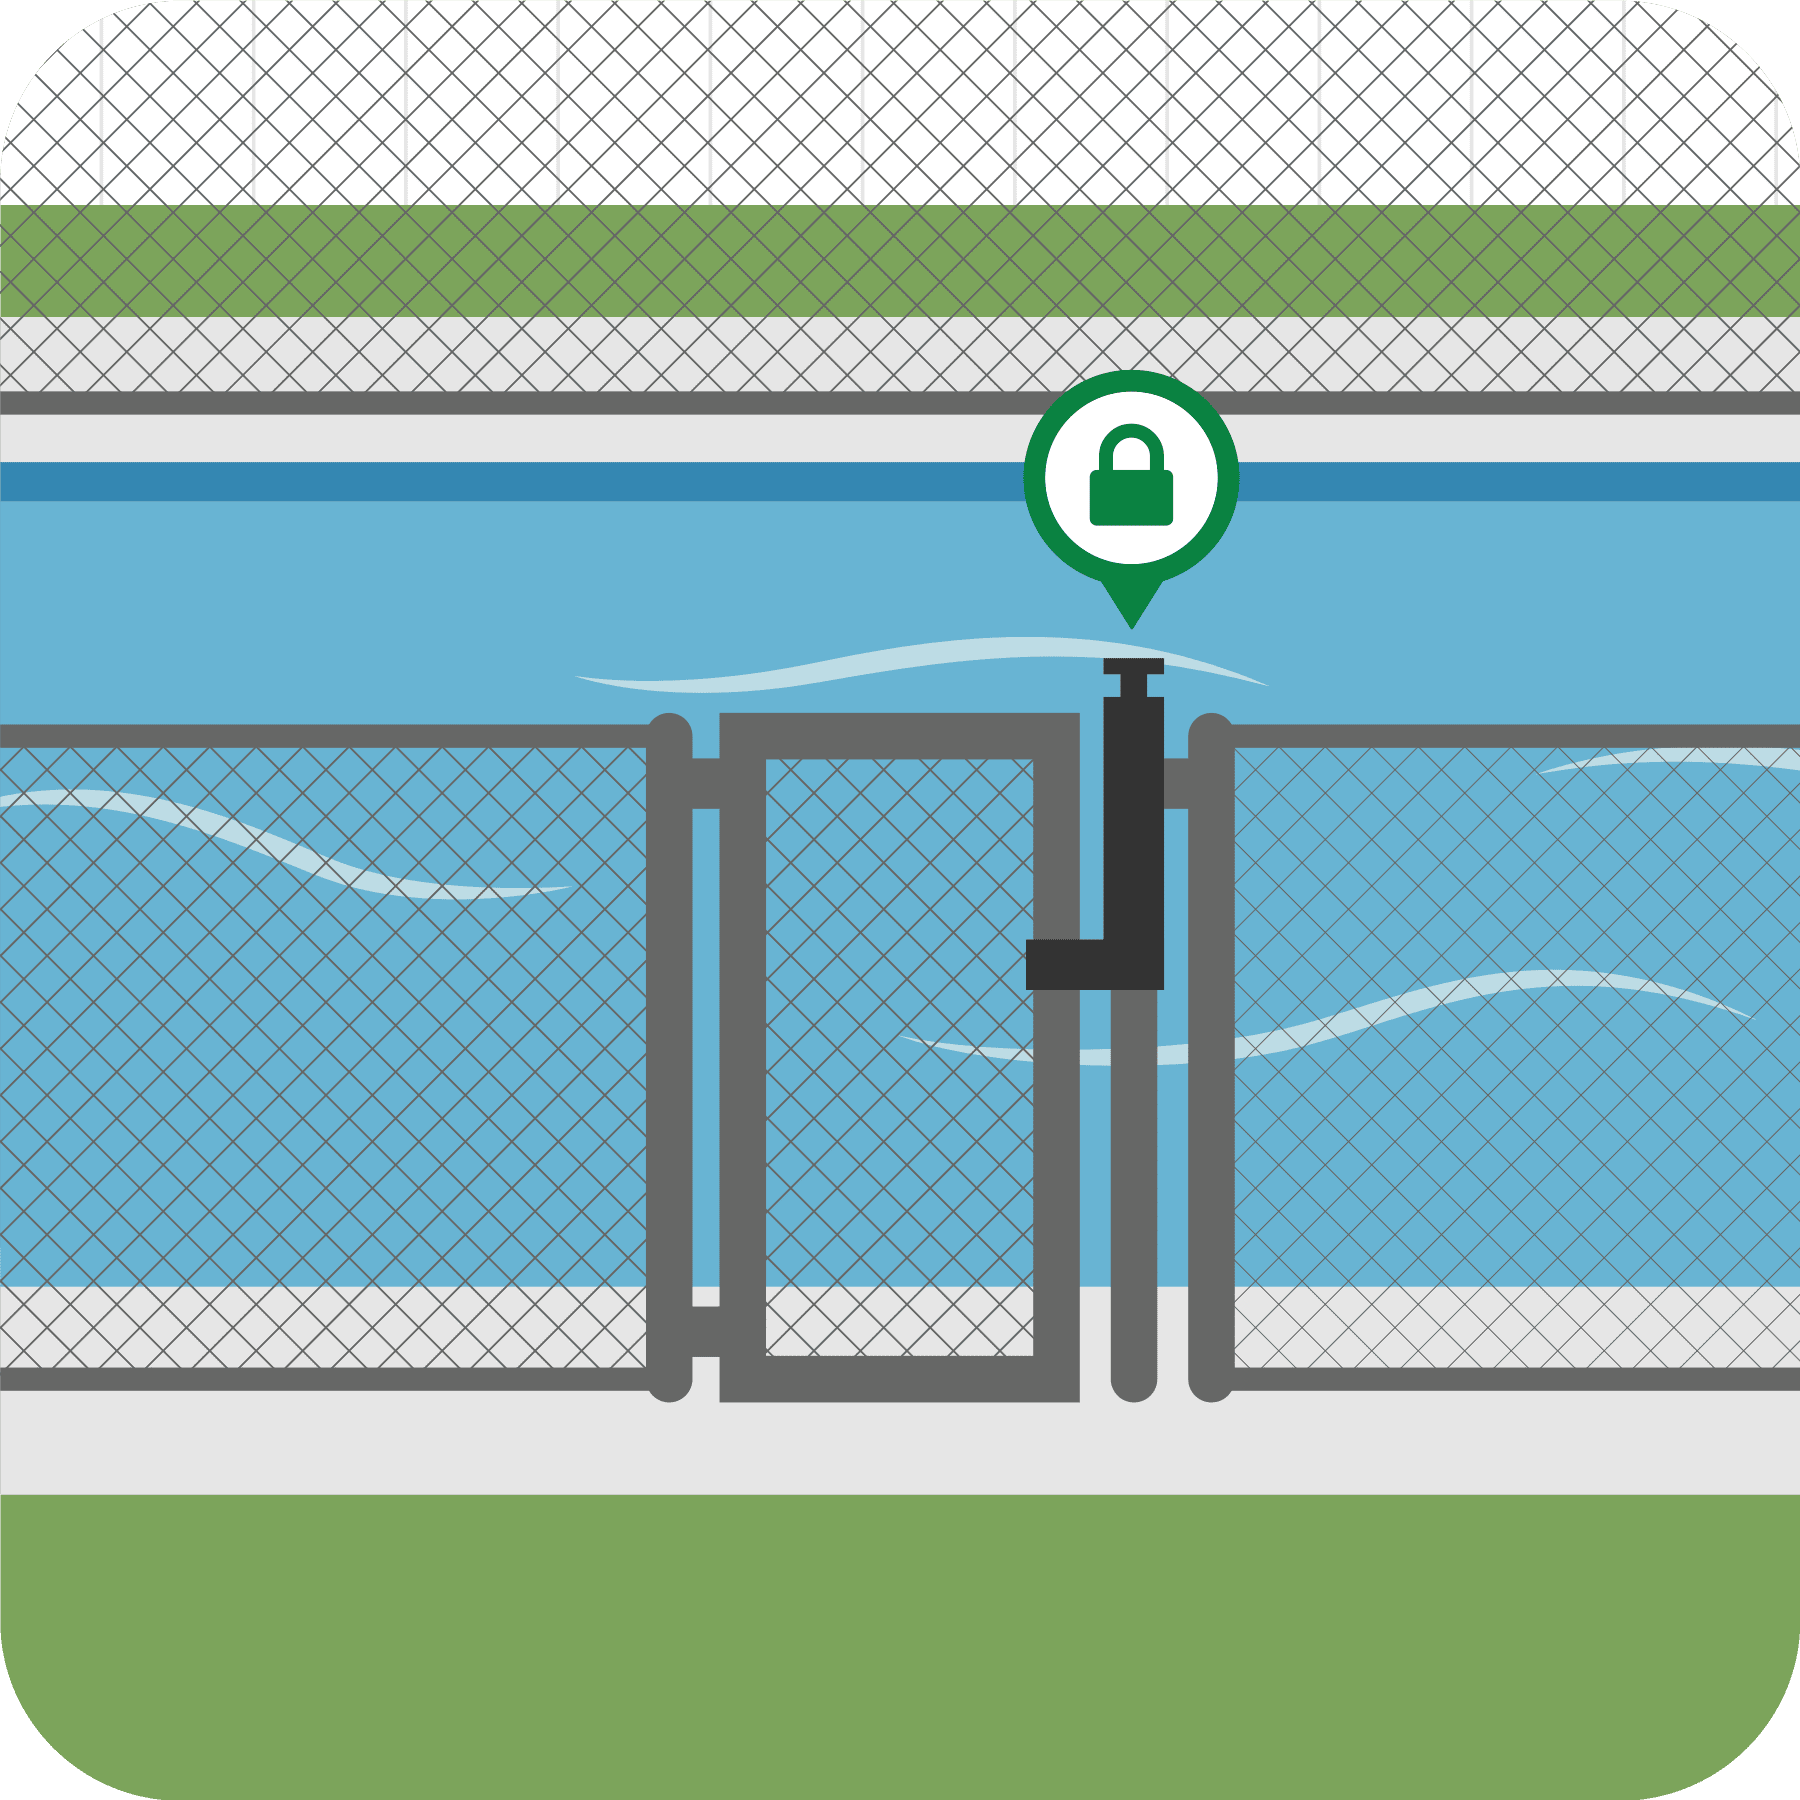 locked pool gate